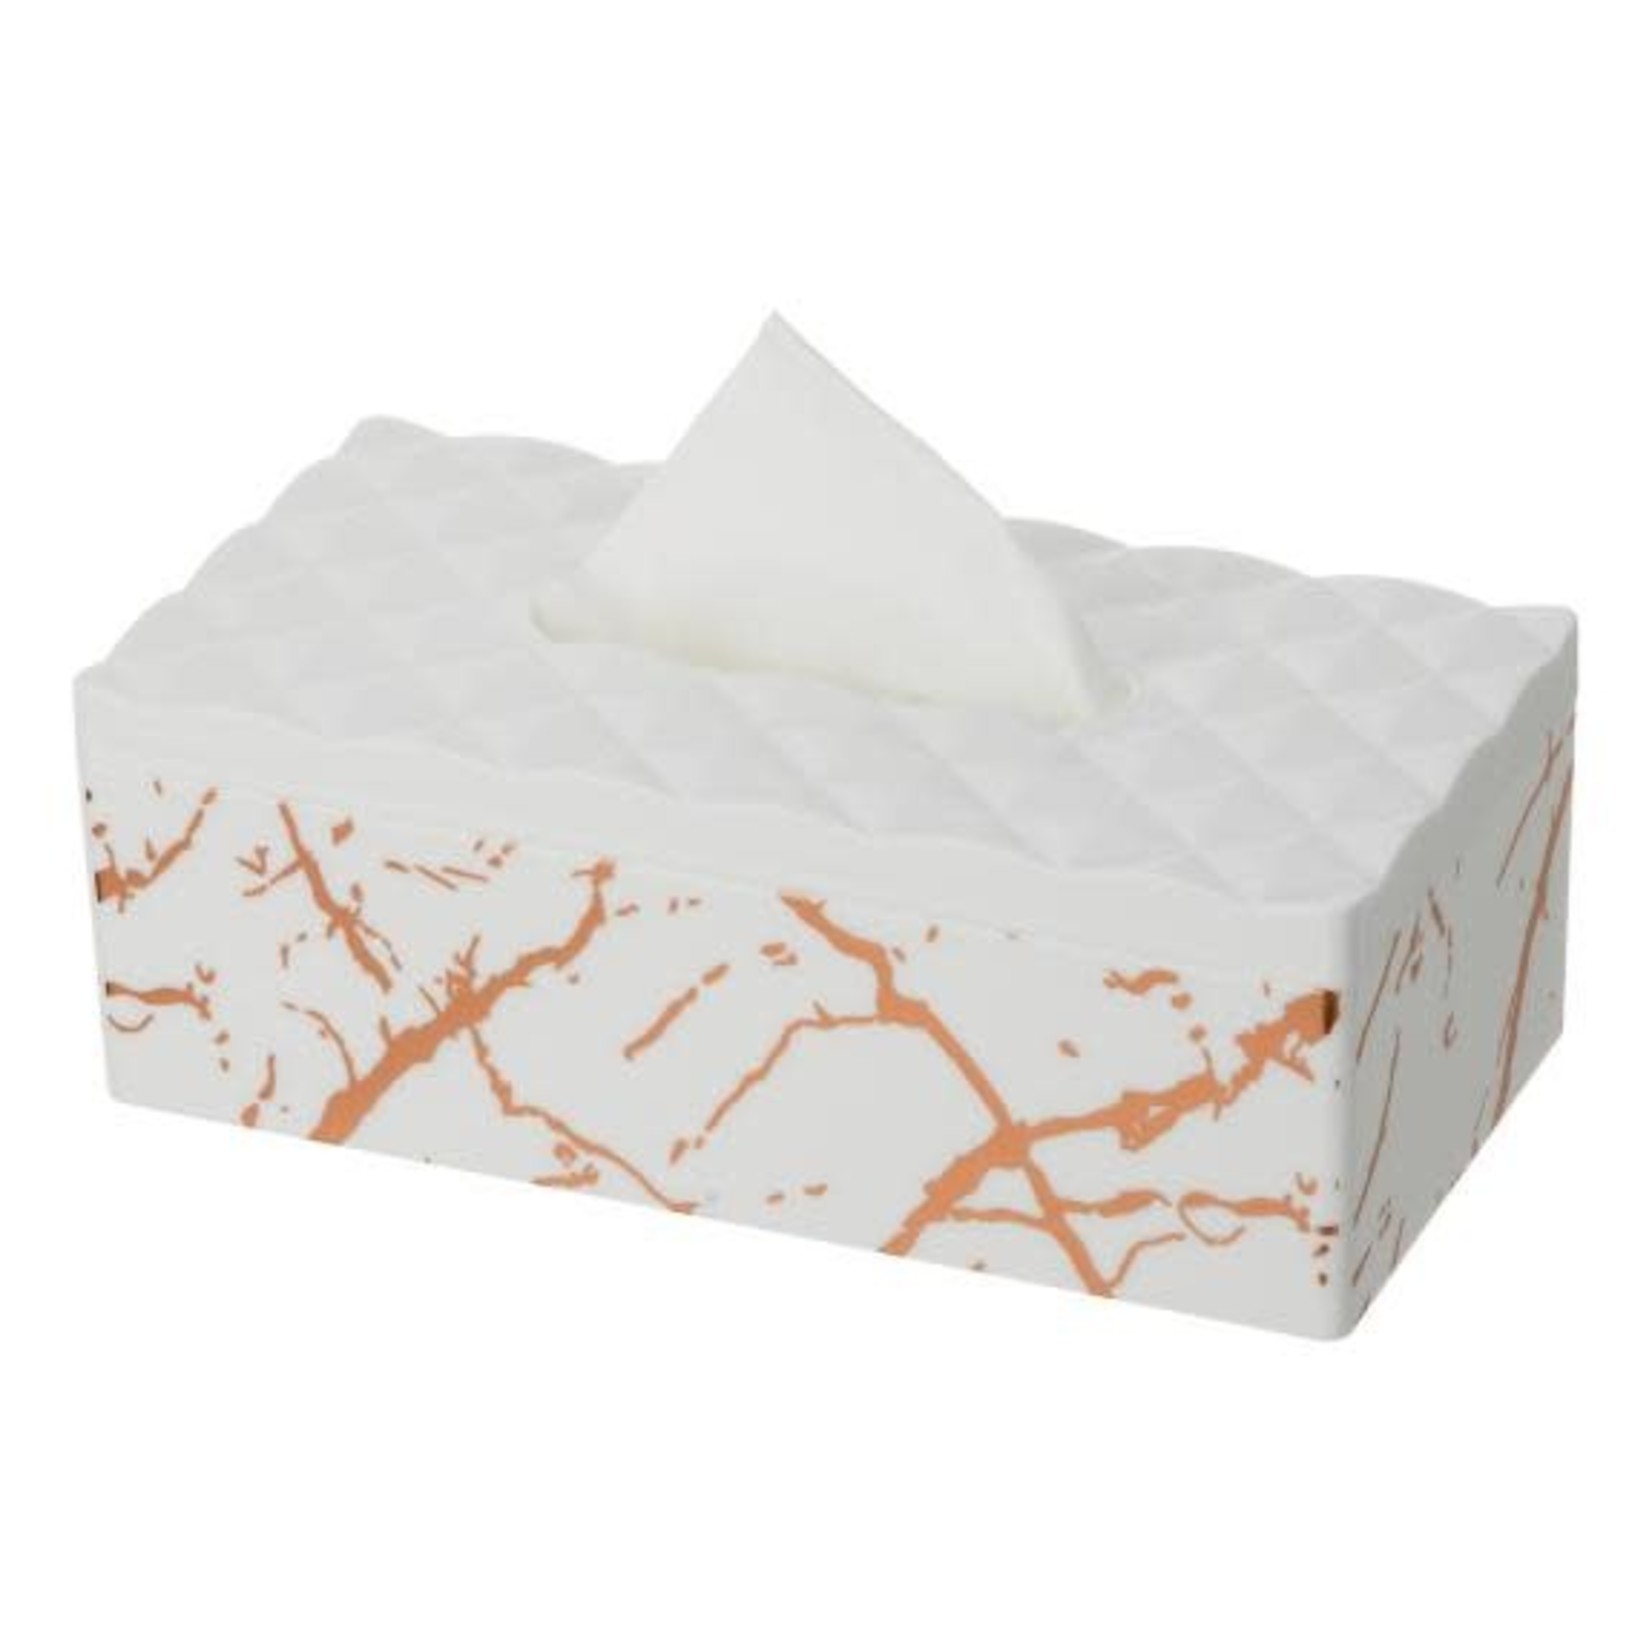 TWS 1236 Tissue Box White W/ Gold Marble Printing 10 x 5.1 x 3.6 inches